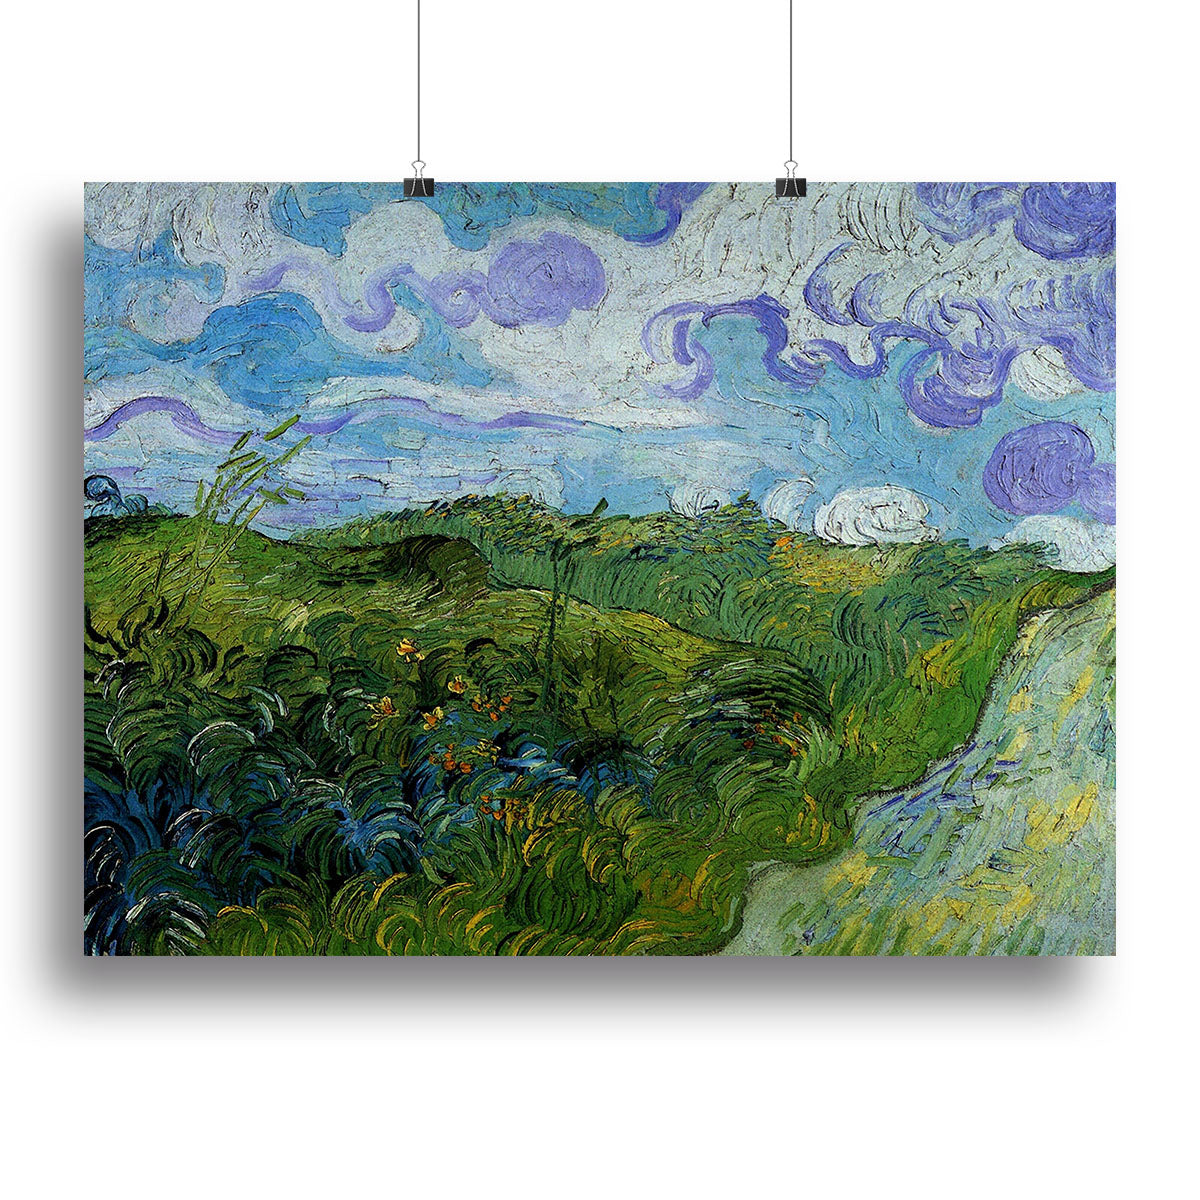 Green Wheat Fields by Van Gogh Canvas Print or Poster - Canvas Art Rocks - 2